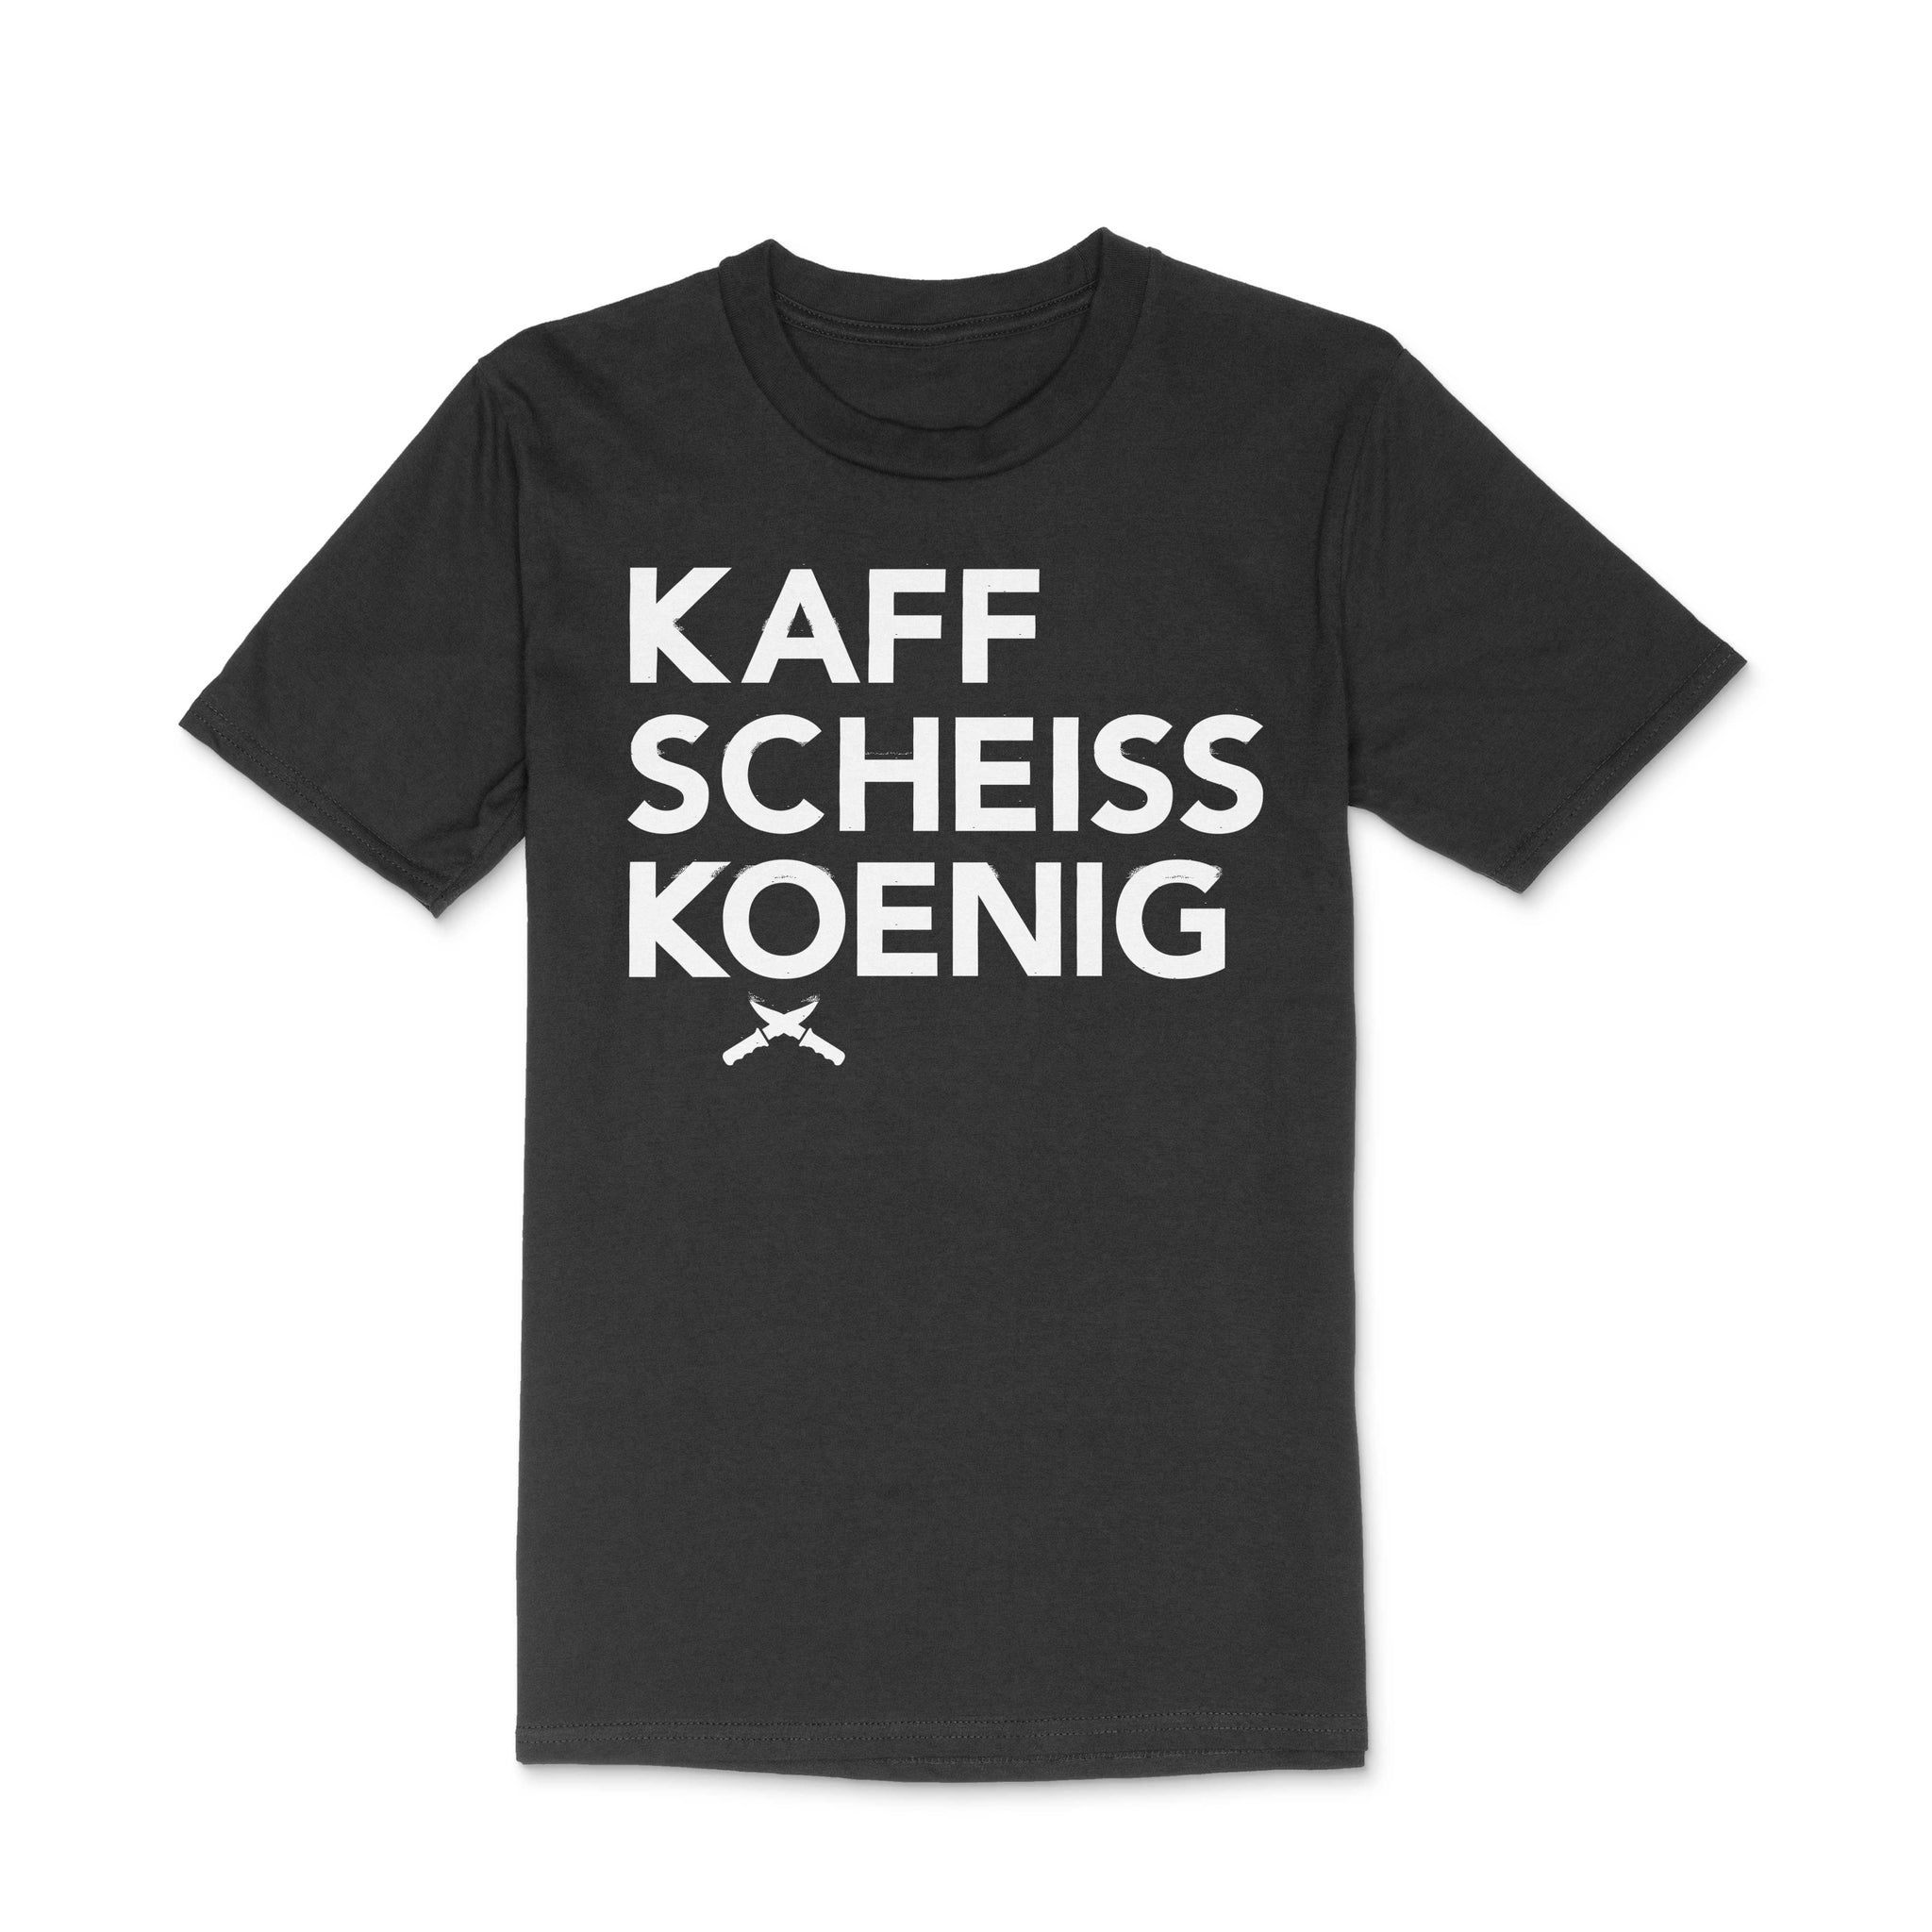 Kaffkoenig · Schei* Kaff Shirt